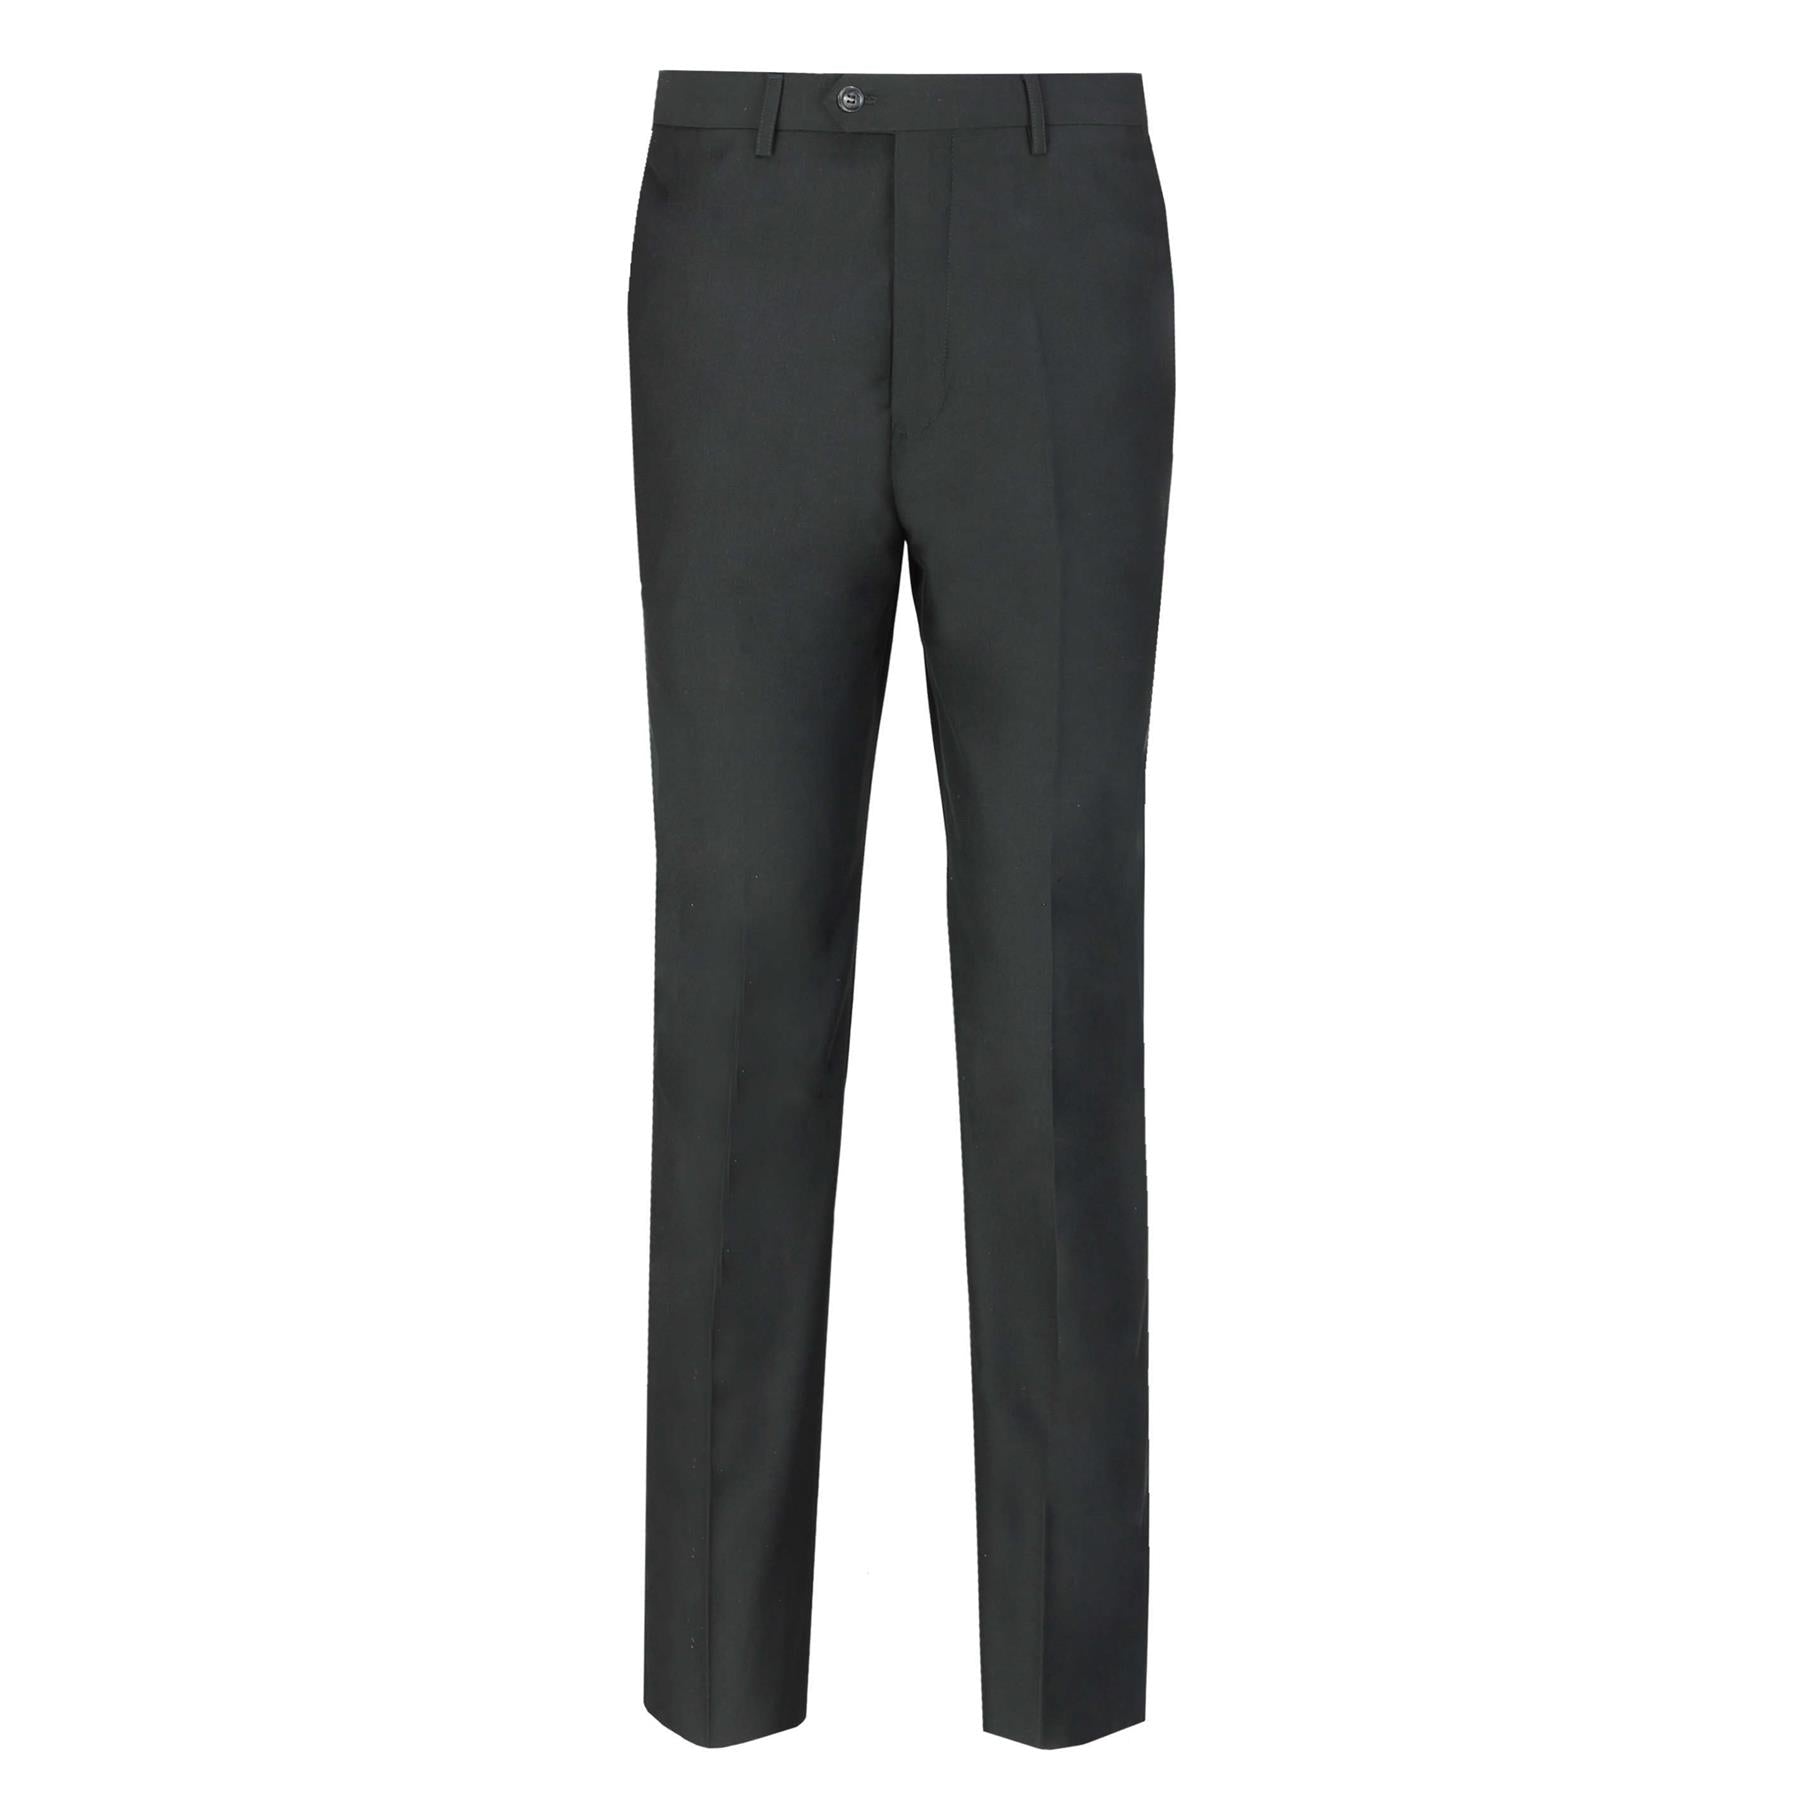 Jross - Black Formal Suit Trouser